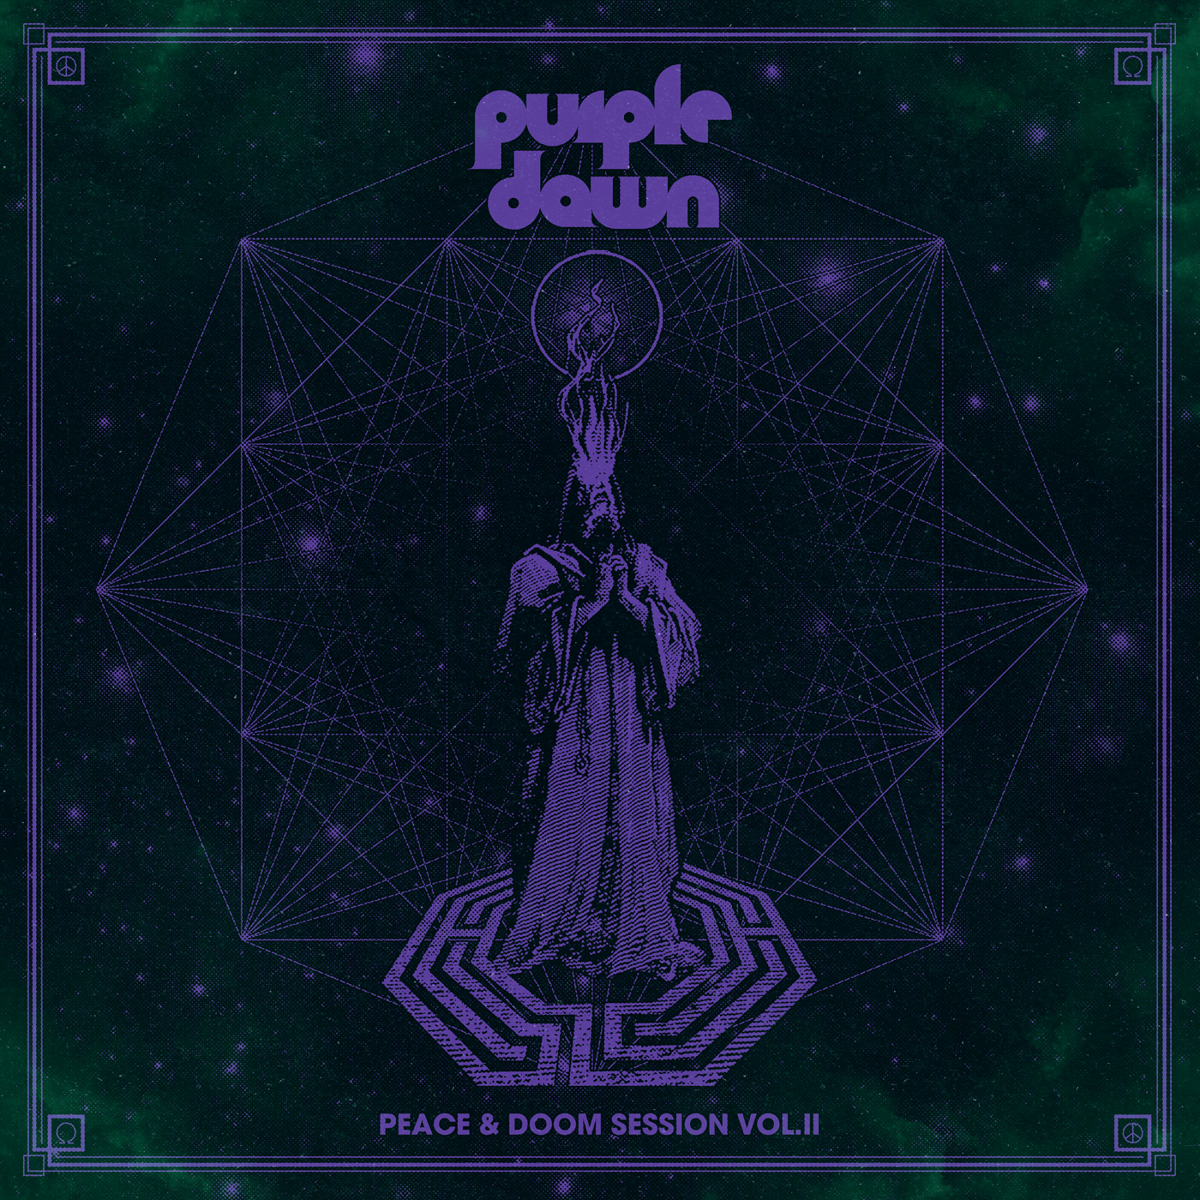 Image of Purple Dawn - Peace & Doom Session Vol. II 220xLTD  Transparent Orange Splatter Purple Vinyl